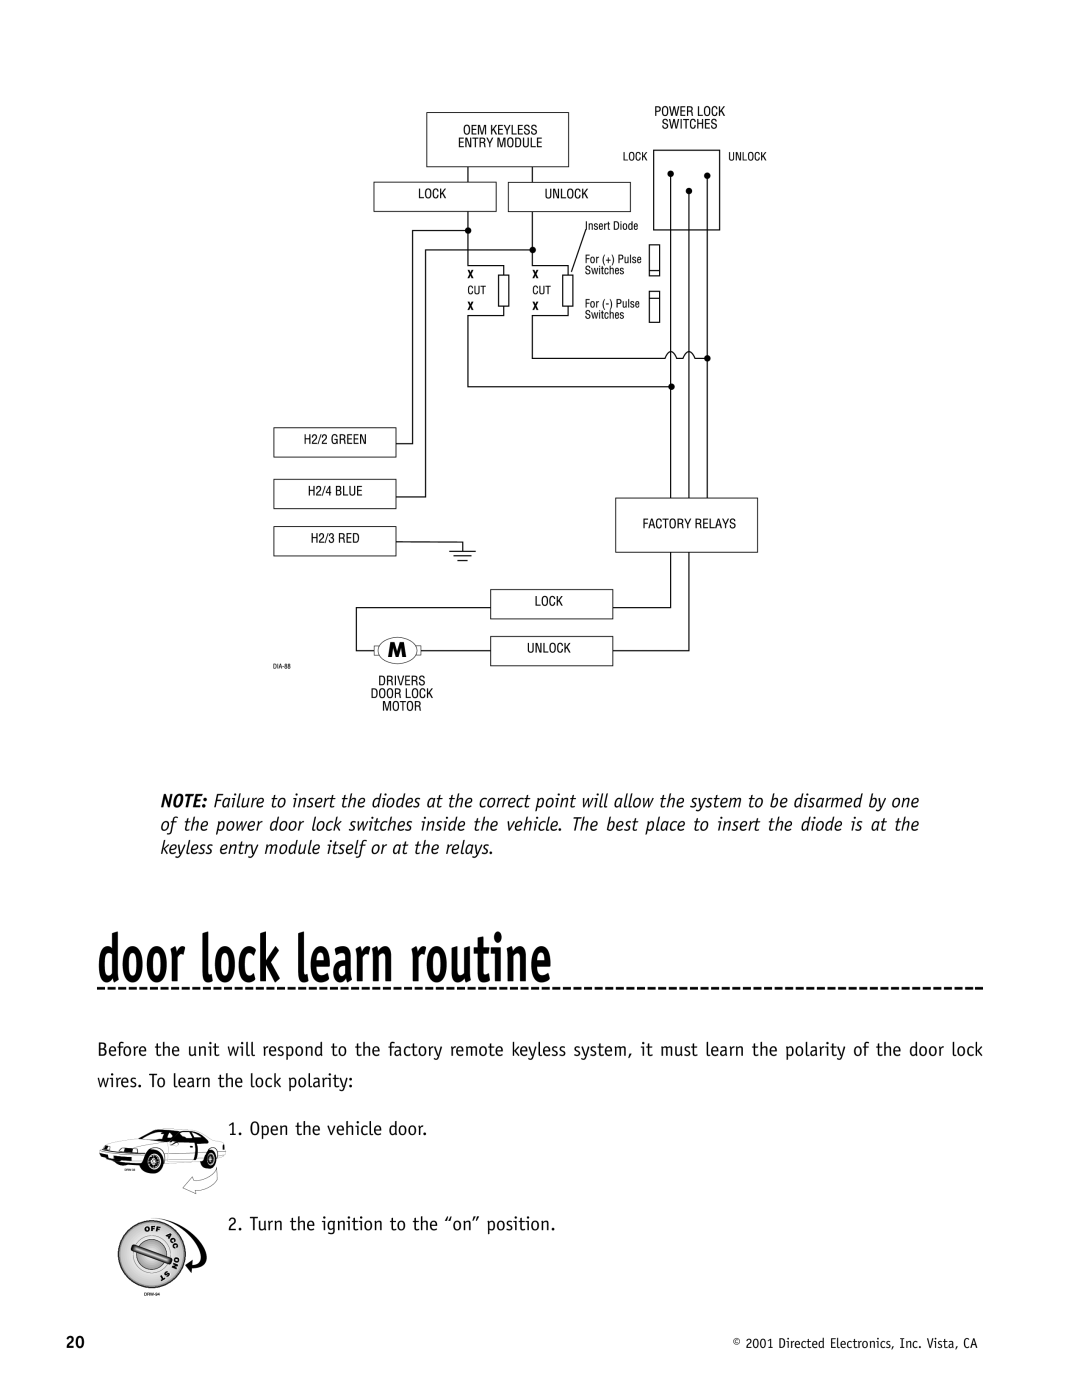 Hornet Car Security 700T manual door lock learn routine 